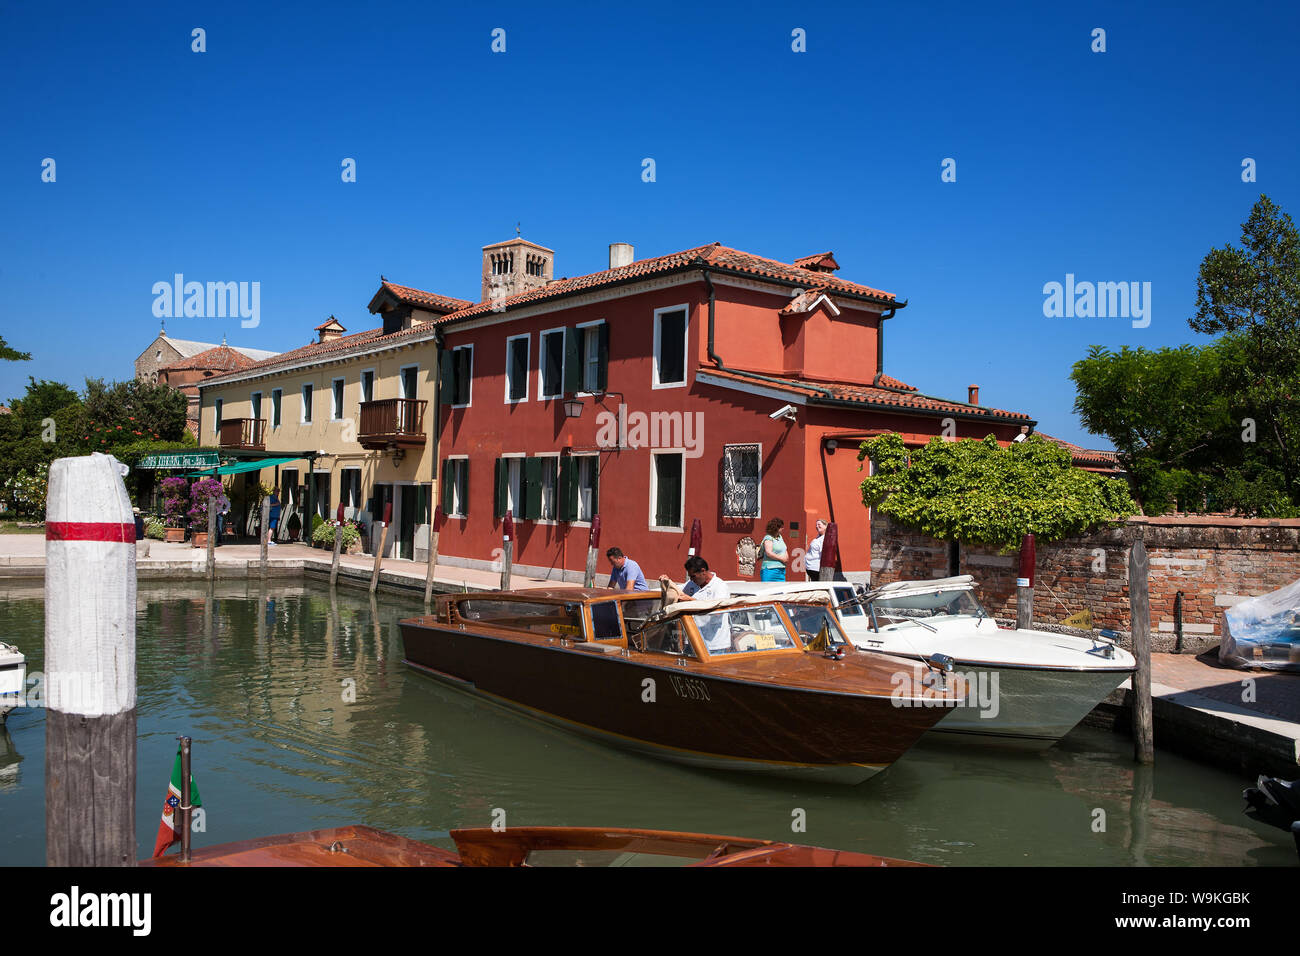 Motoscafi in the canal basin at Piazza Santa Fosca on the island of Torcello, Venetian Lagoon, Veneto, Italy Stock Photo